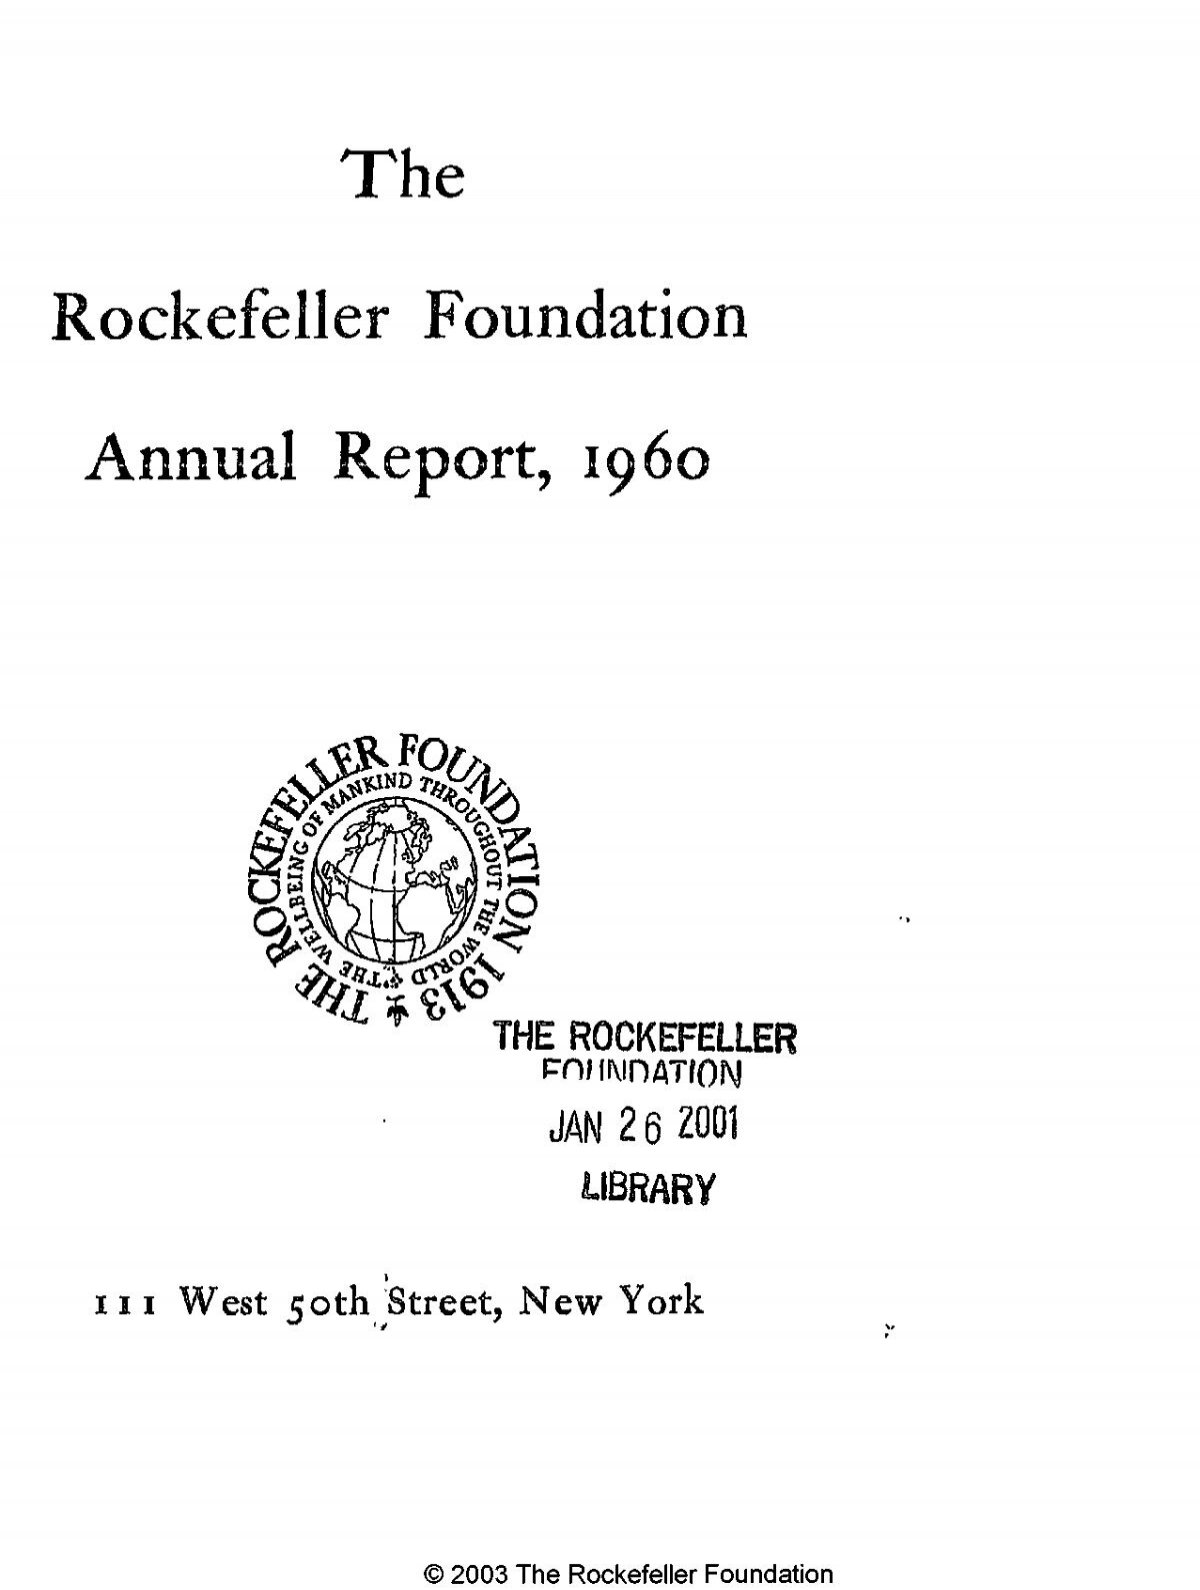 RF Annual Report - 1996 - The Rockefeller Foundation